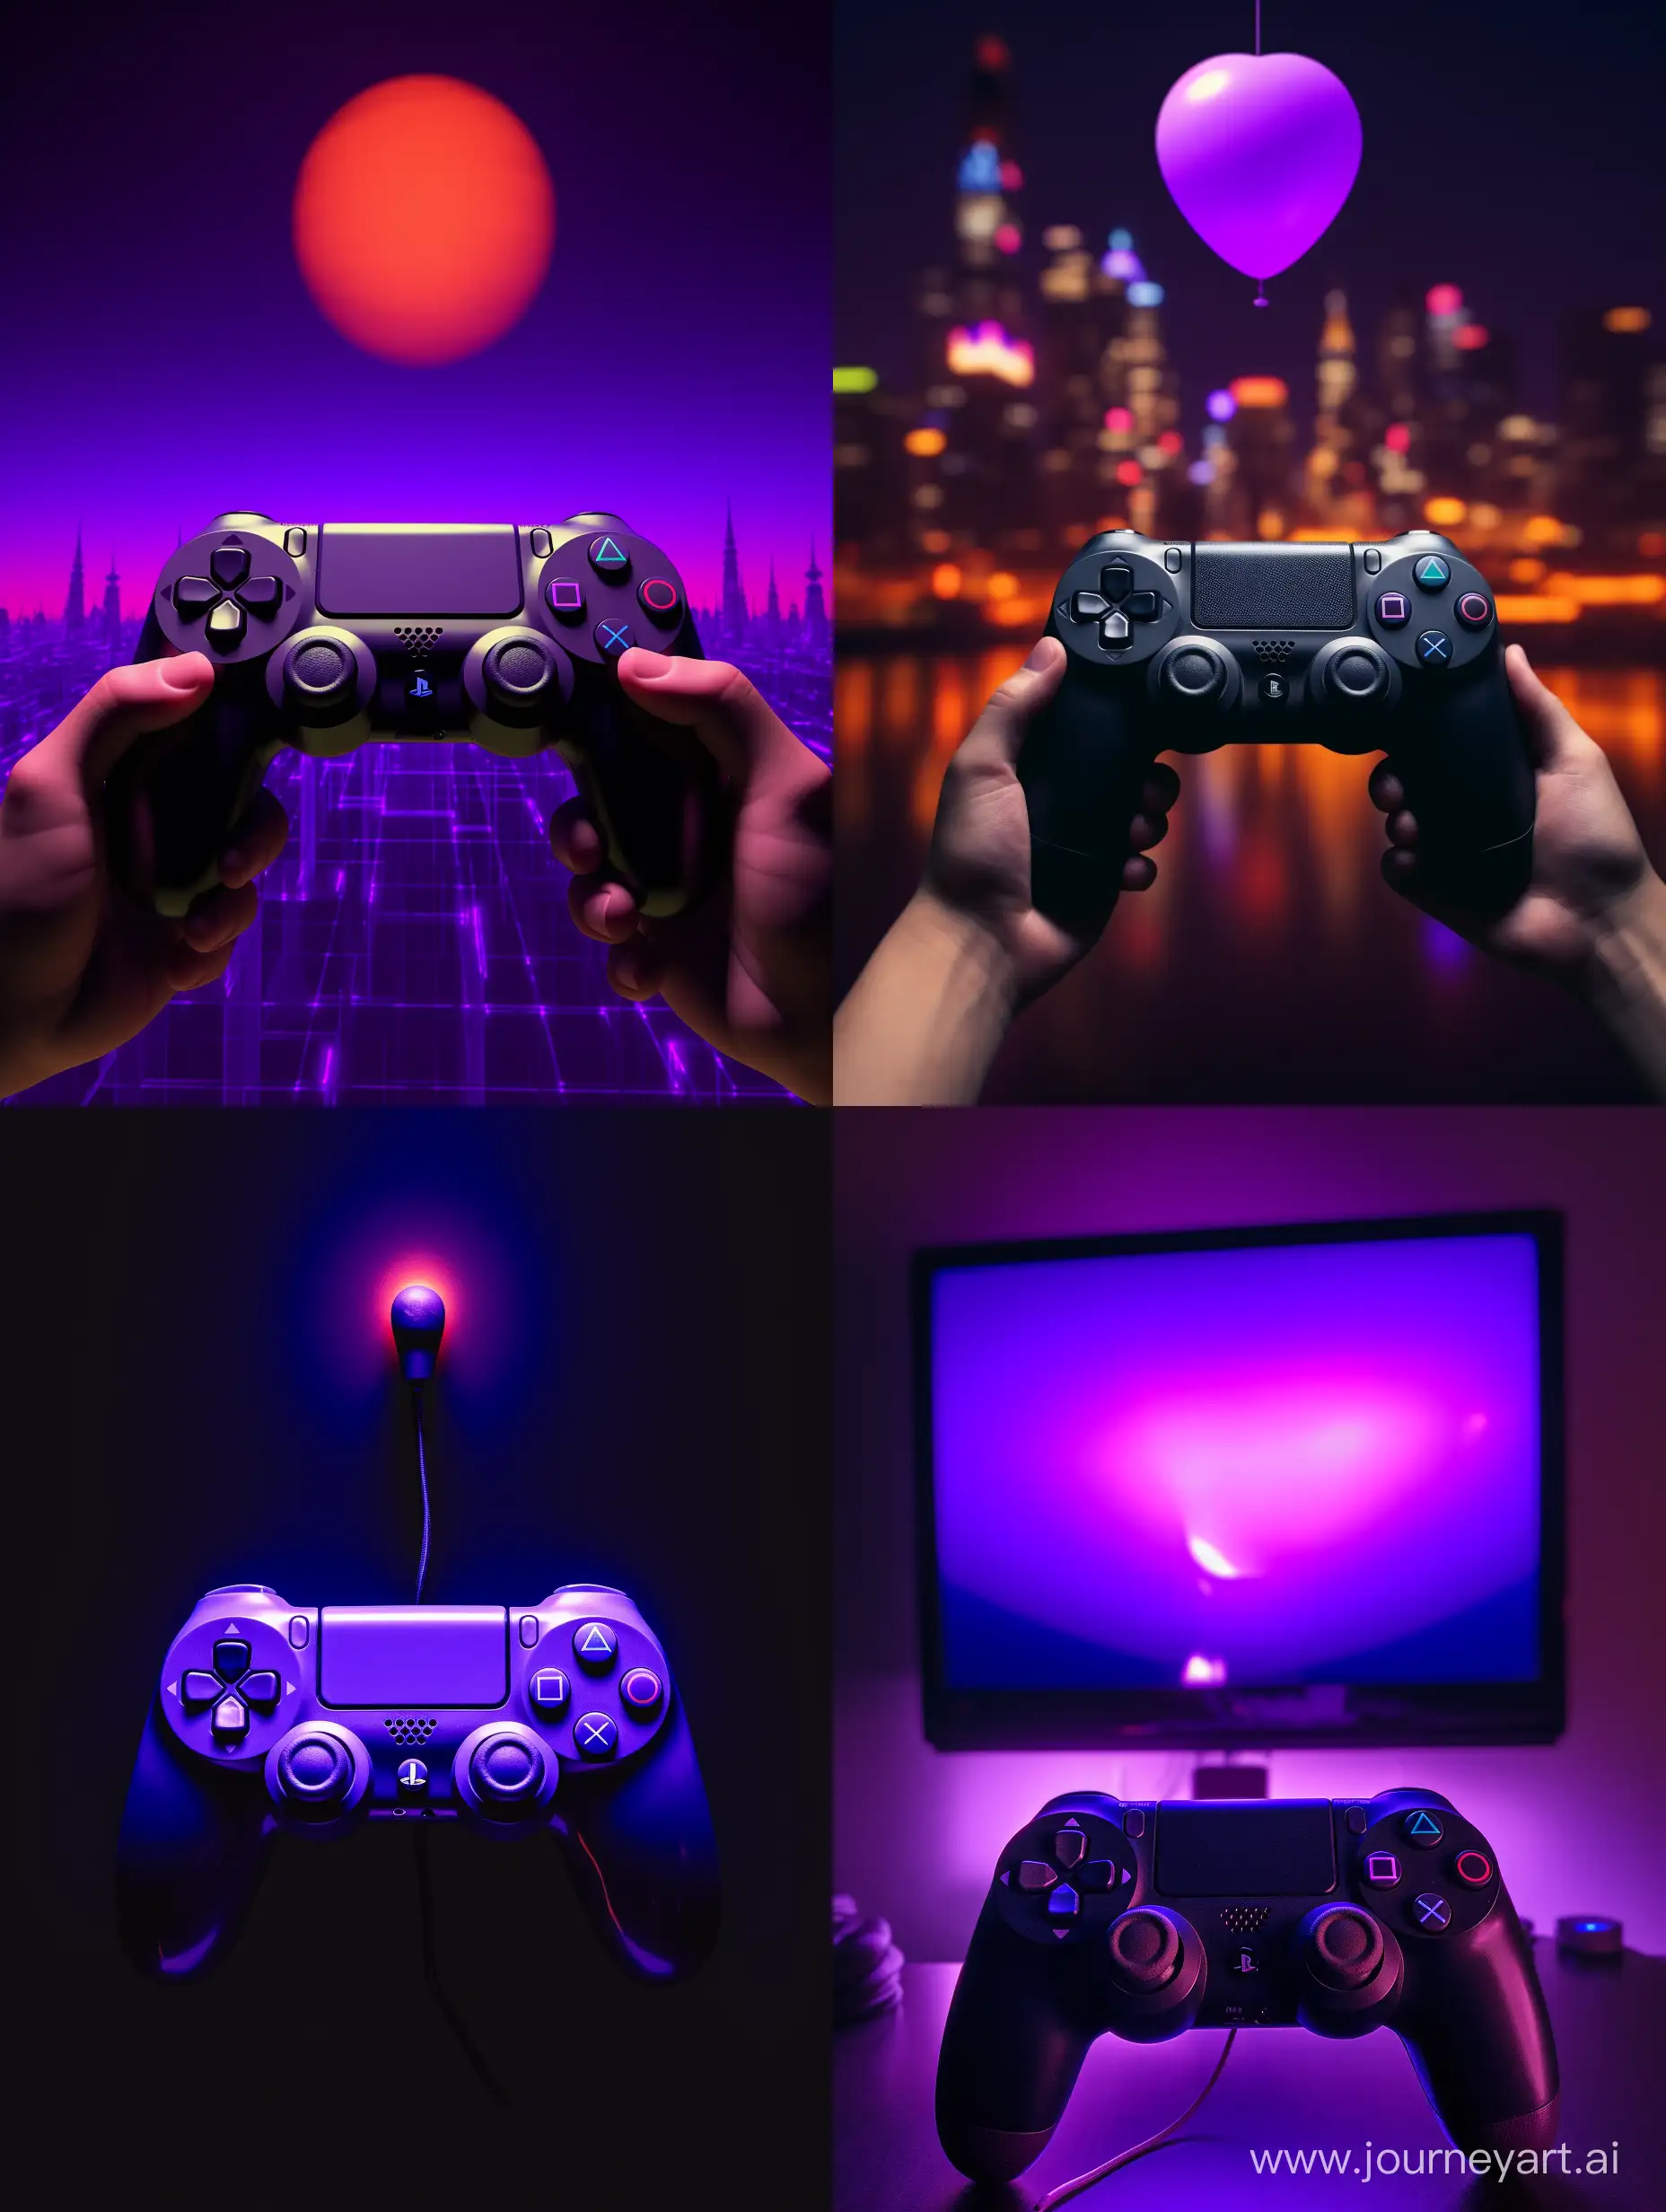 PlayStation-Controller-Illuminated-with-Purple-Balloon-at-Night